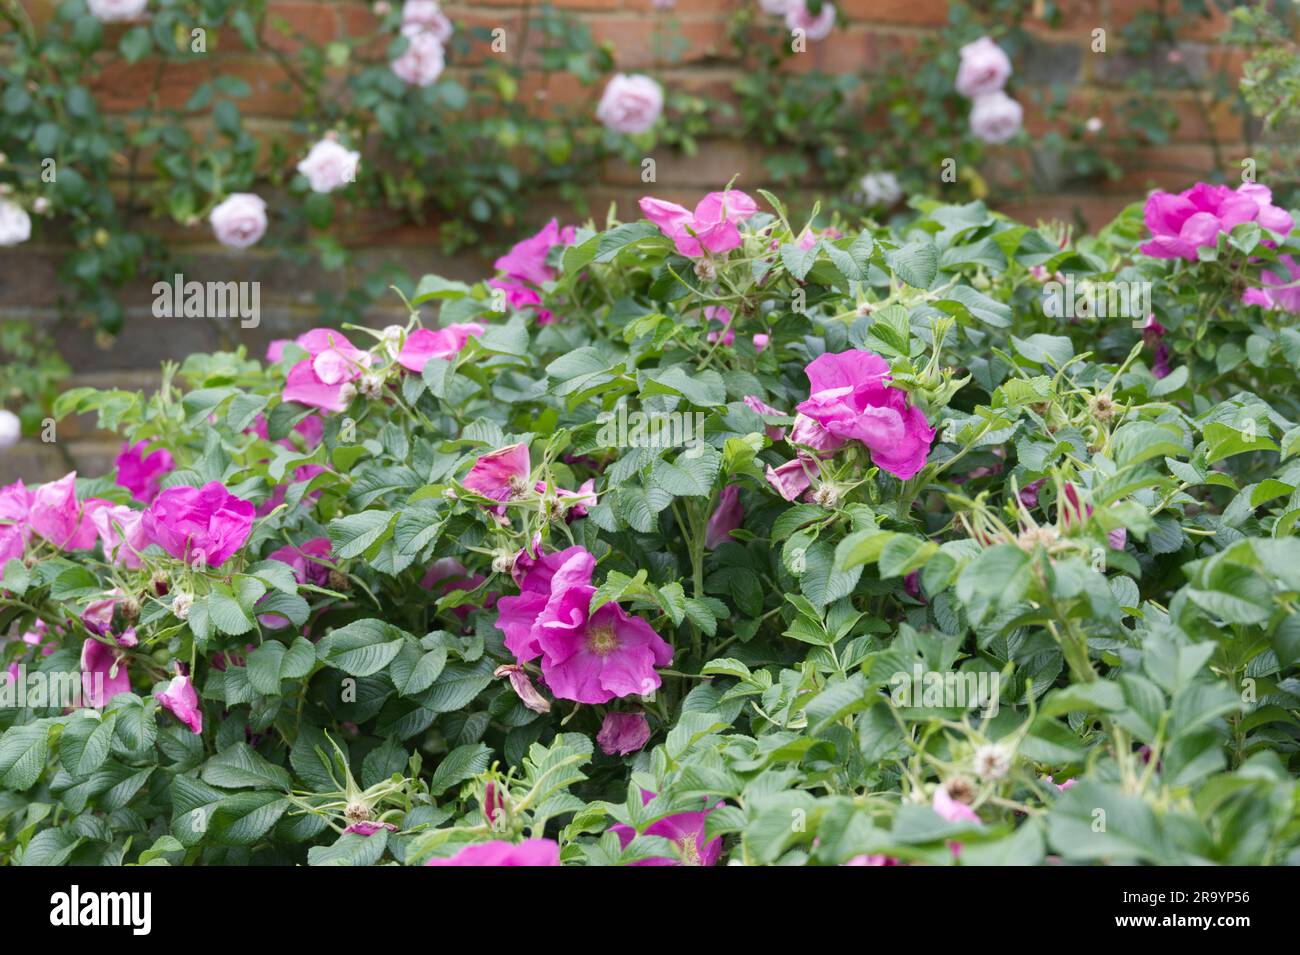 Open bright pink summer flowers of rose Rosa rugosa rubra in UK garden June Stock Photo